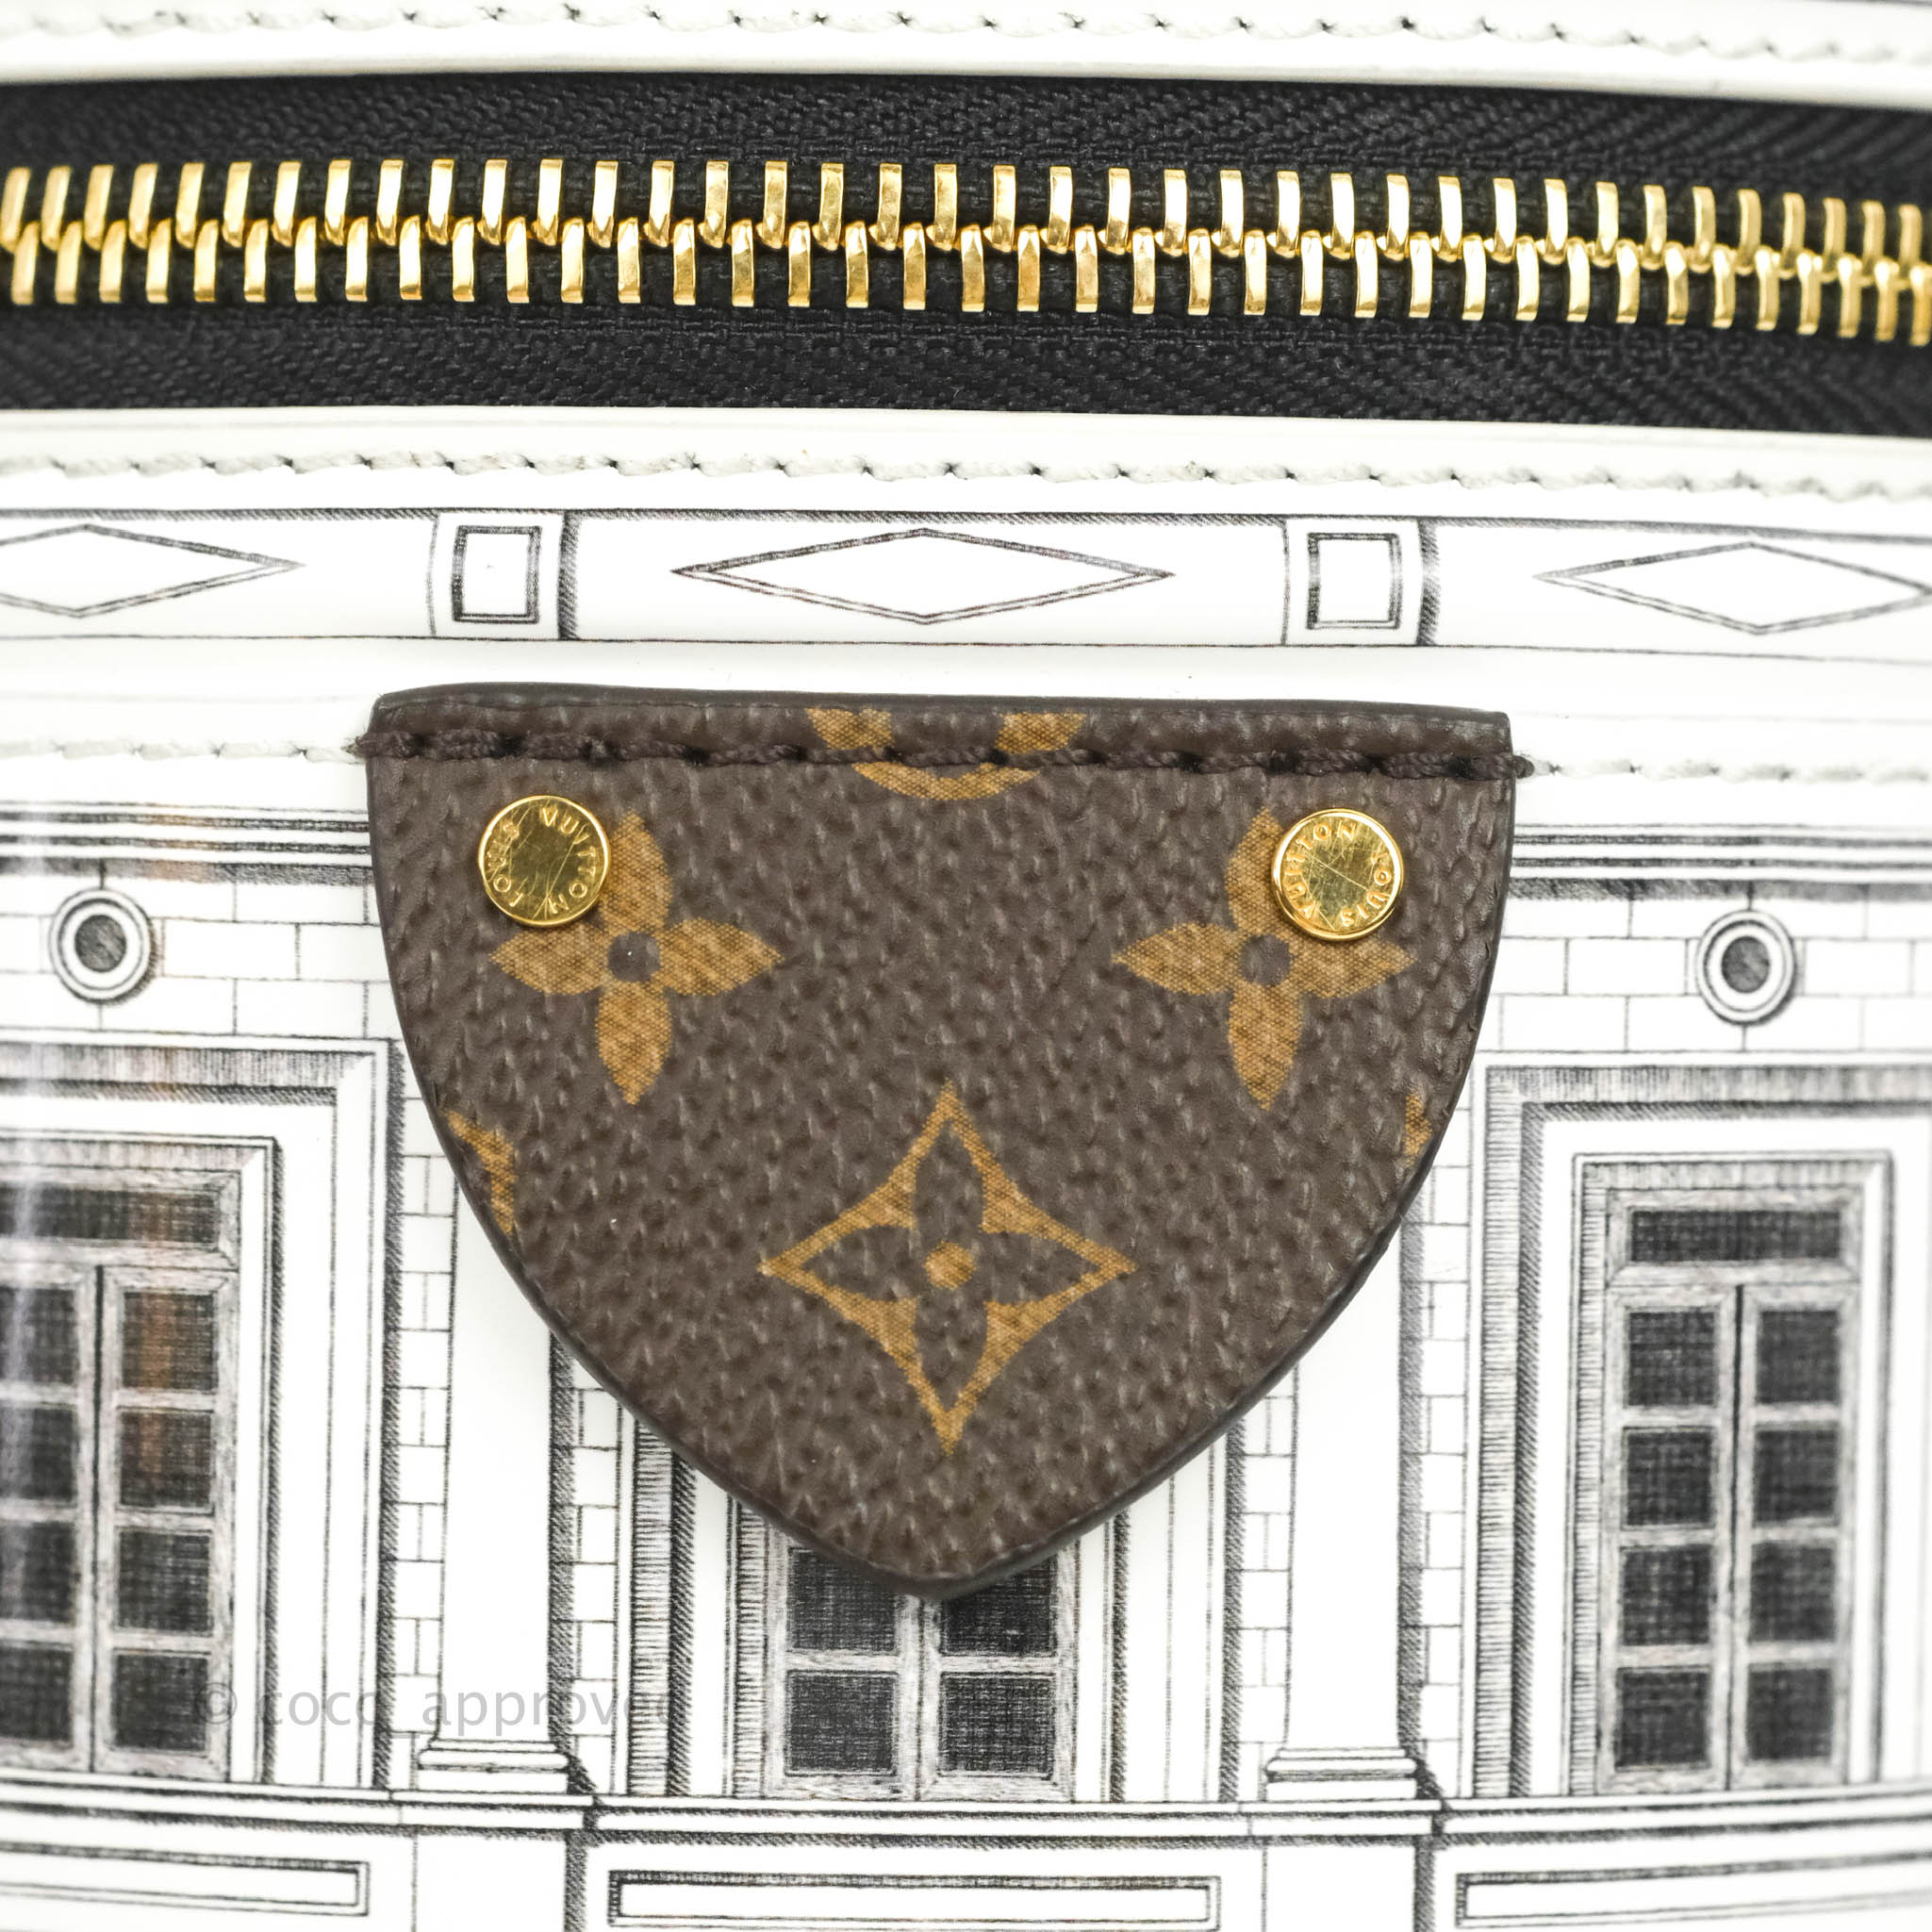 Louis Vuitton Cannes Vase Architettura Handbag Patent Calfskin